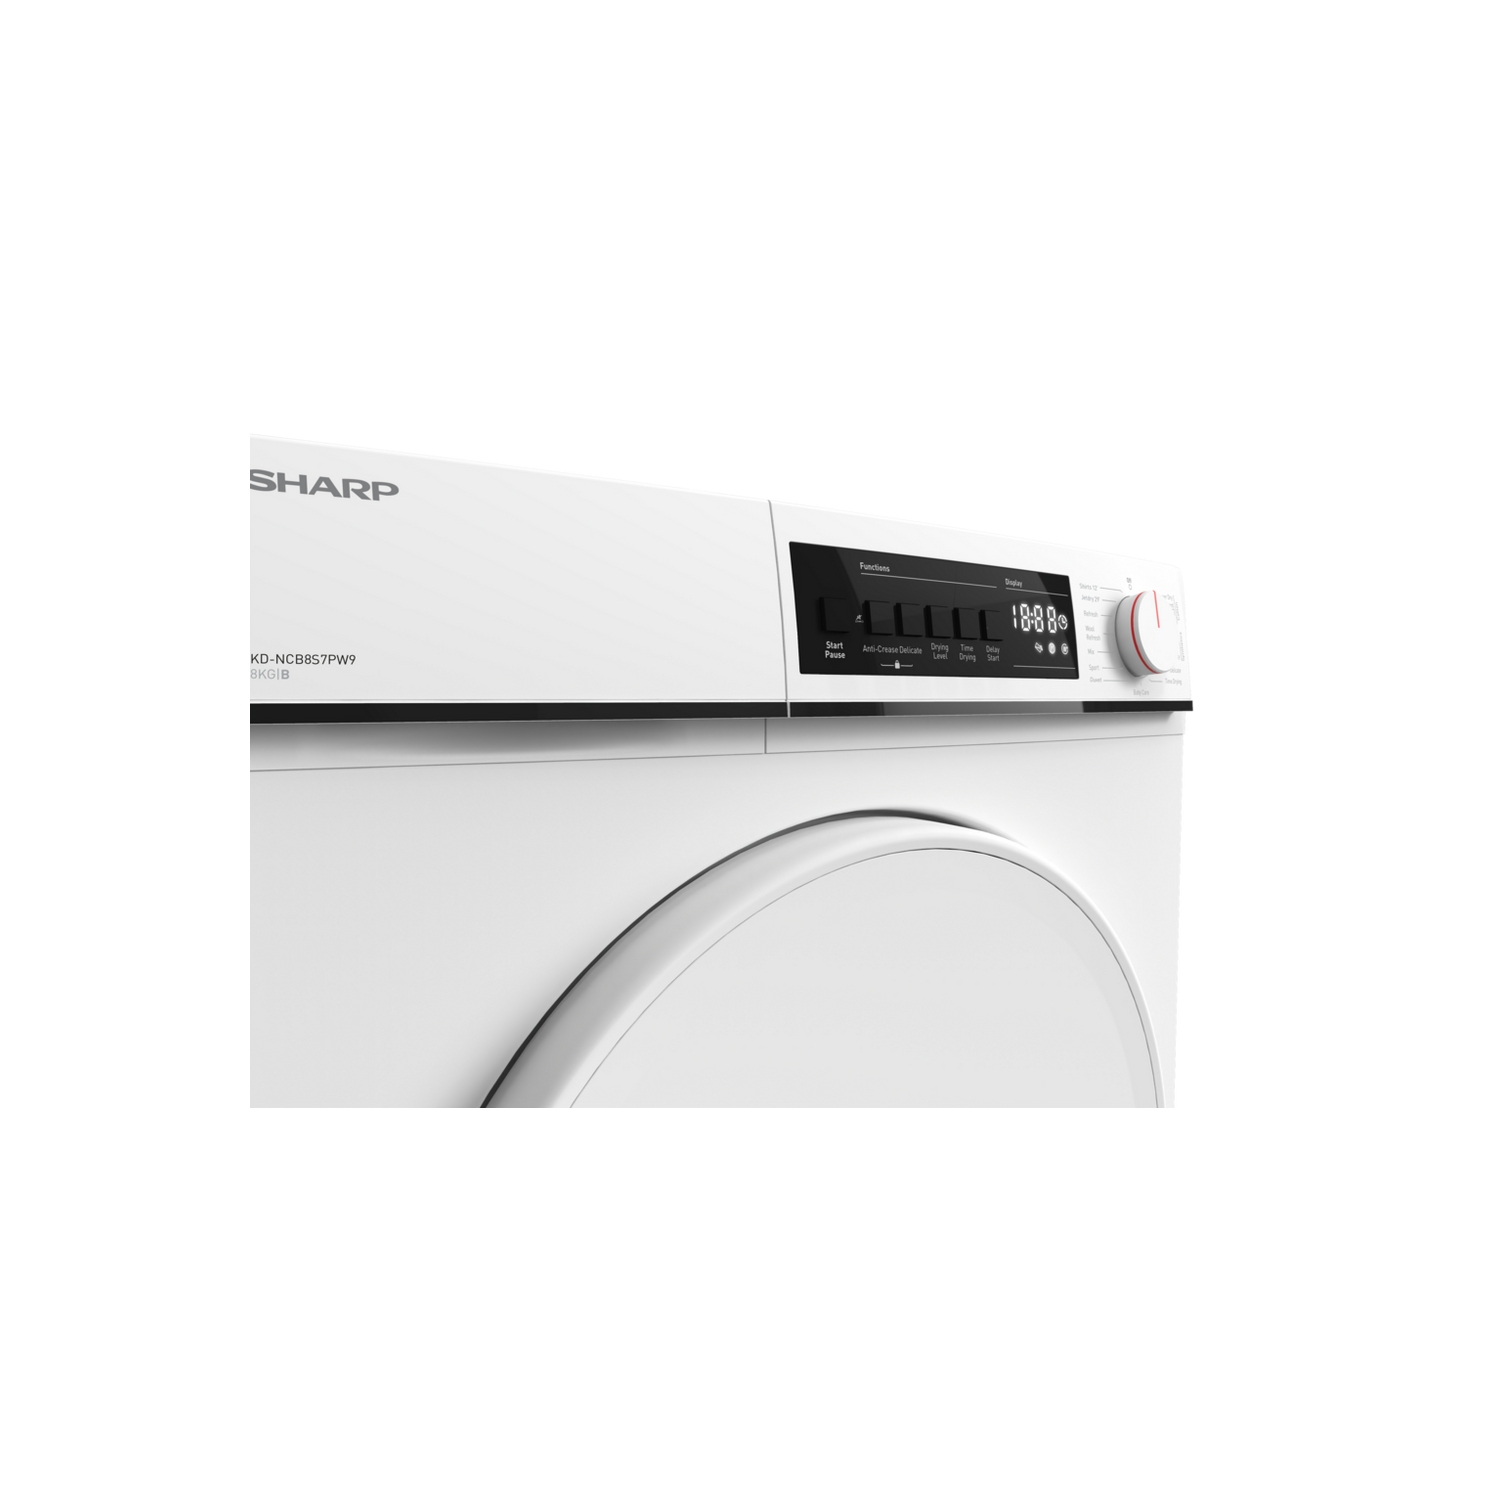 SHARP KD-NCB8S7PW9 8 kg Condenser Tumble Dryer - White - 3